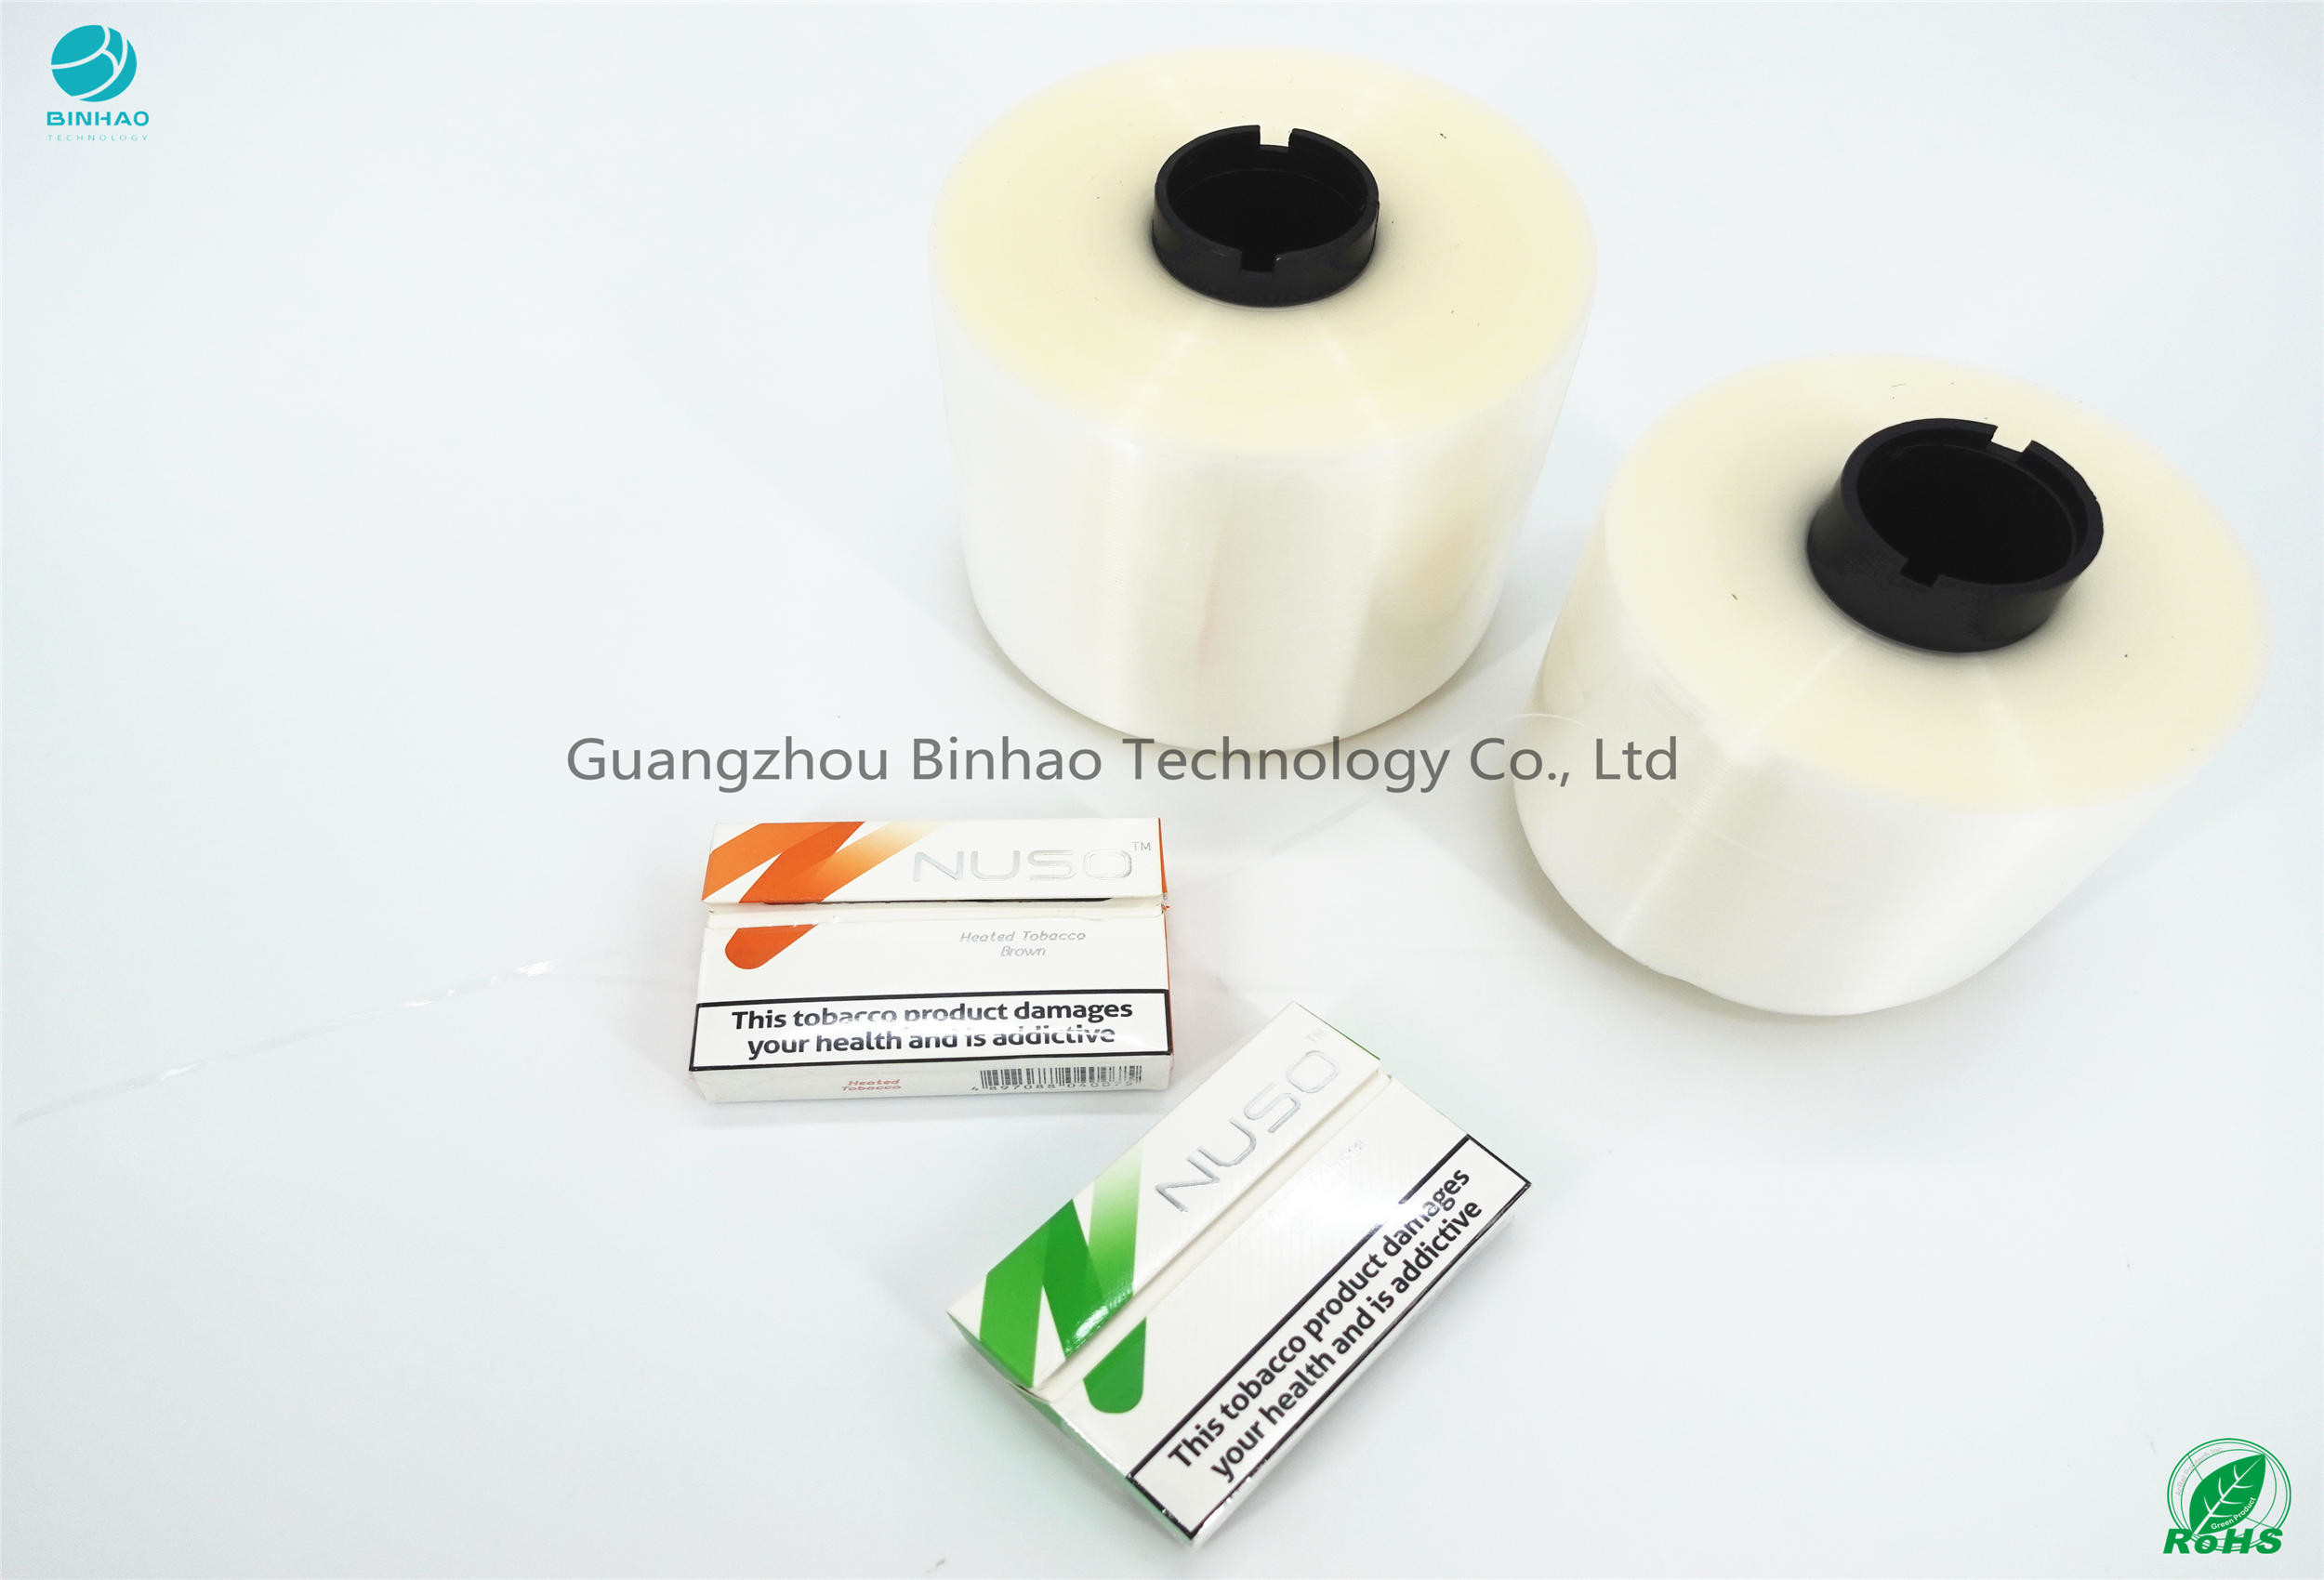 Tear Tape Self Adhesive نوع مهم و چسبنده 2.5 میلی متر برای بسته بندی بدون حرارت